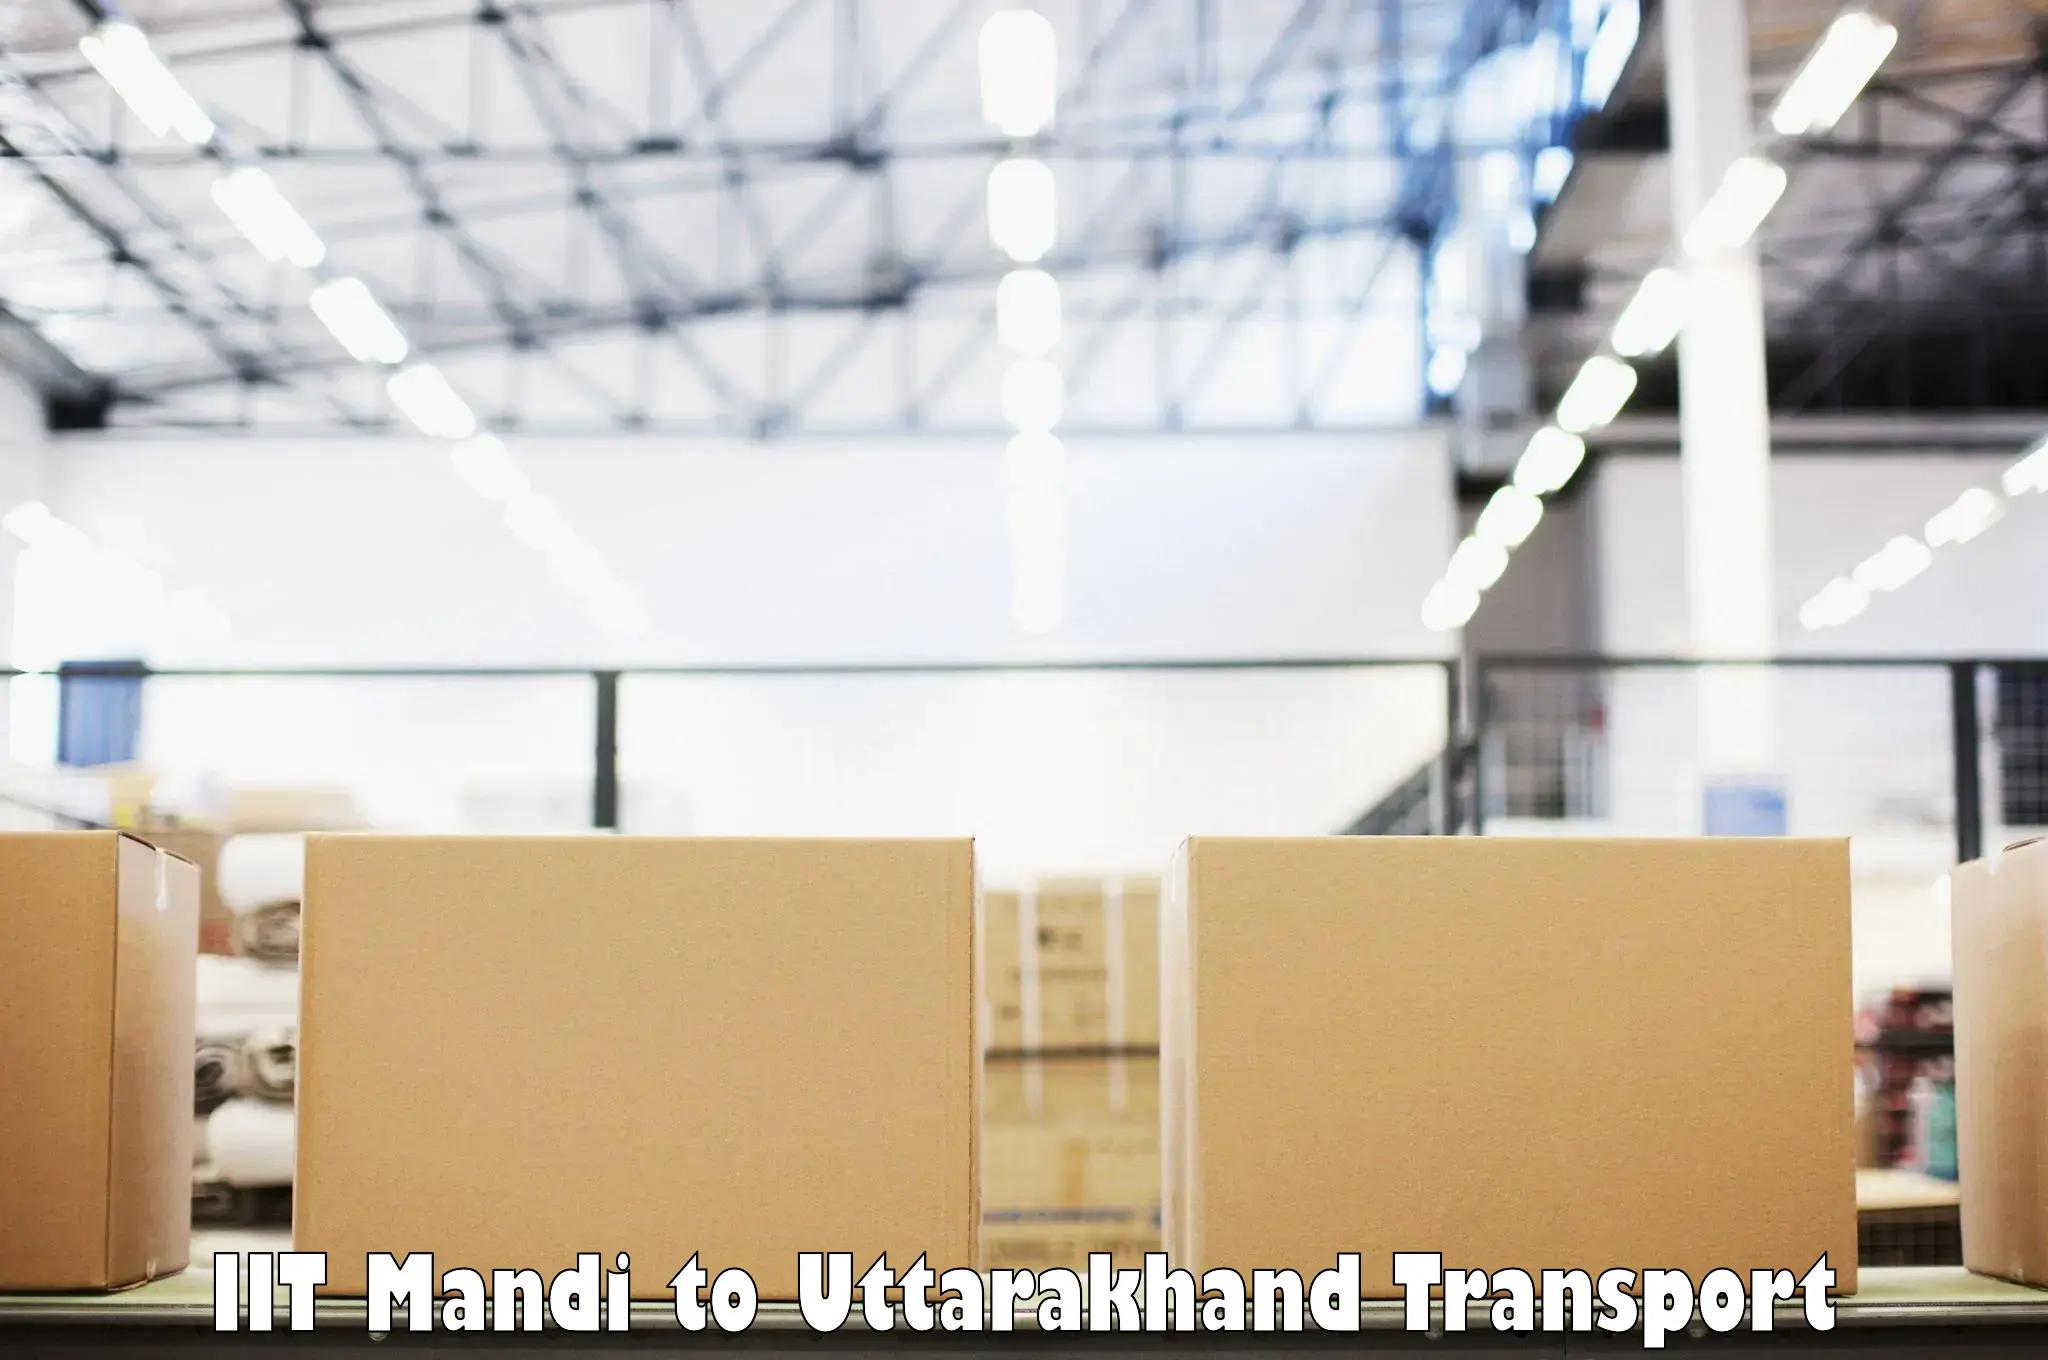 Daily transport service in IIT Mandi to Dehradun